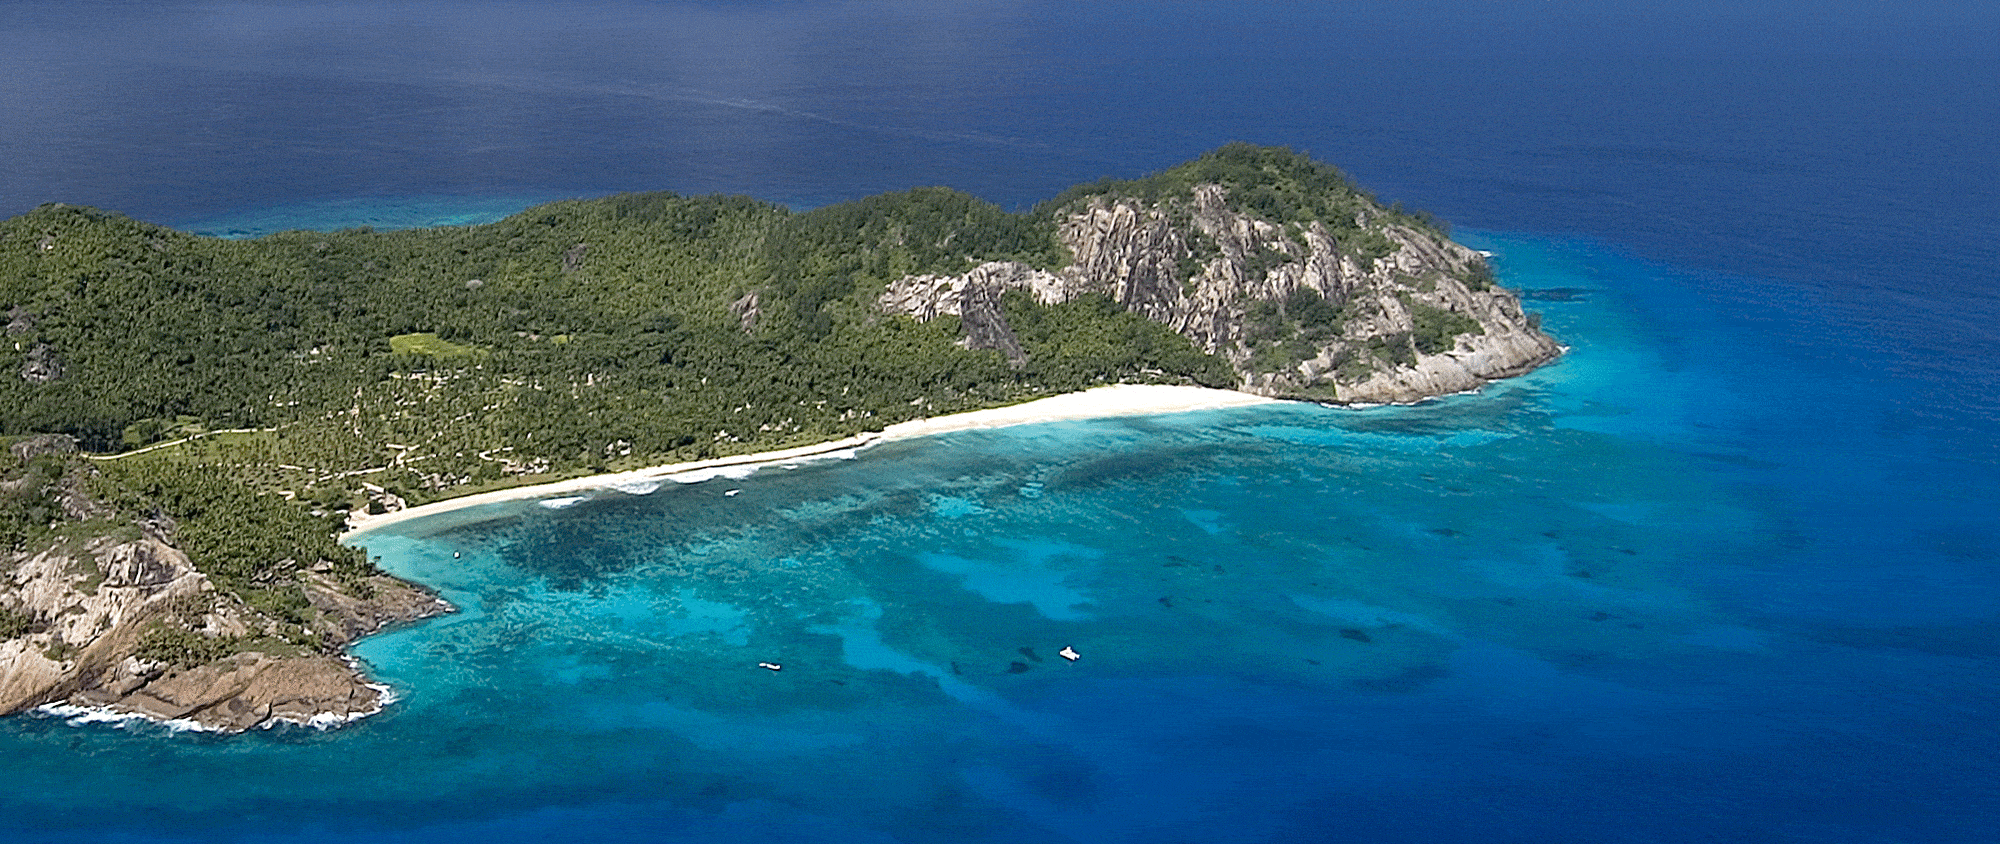 North Island, Private Island, Seychelles